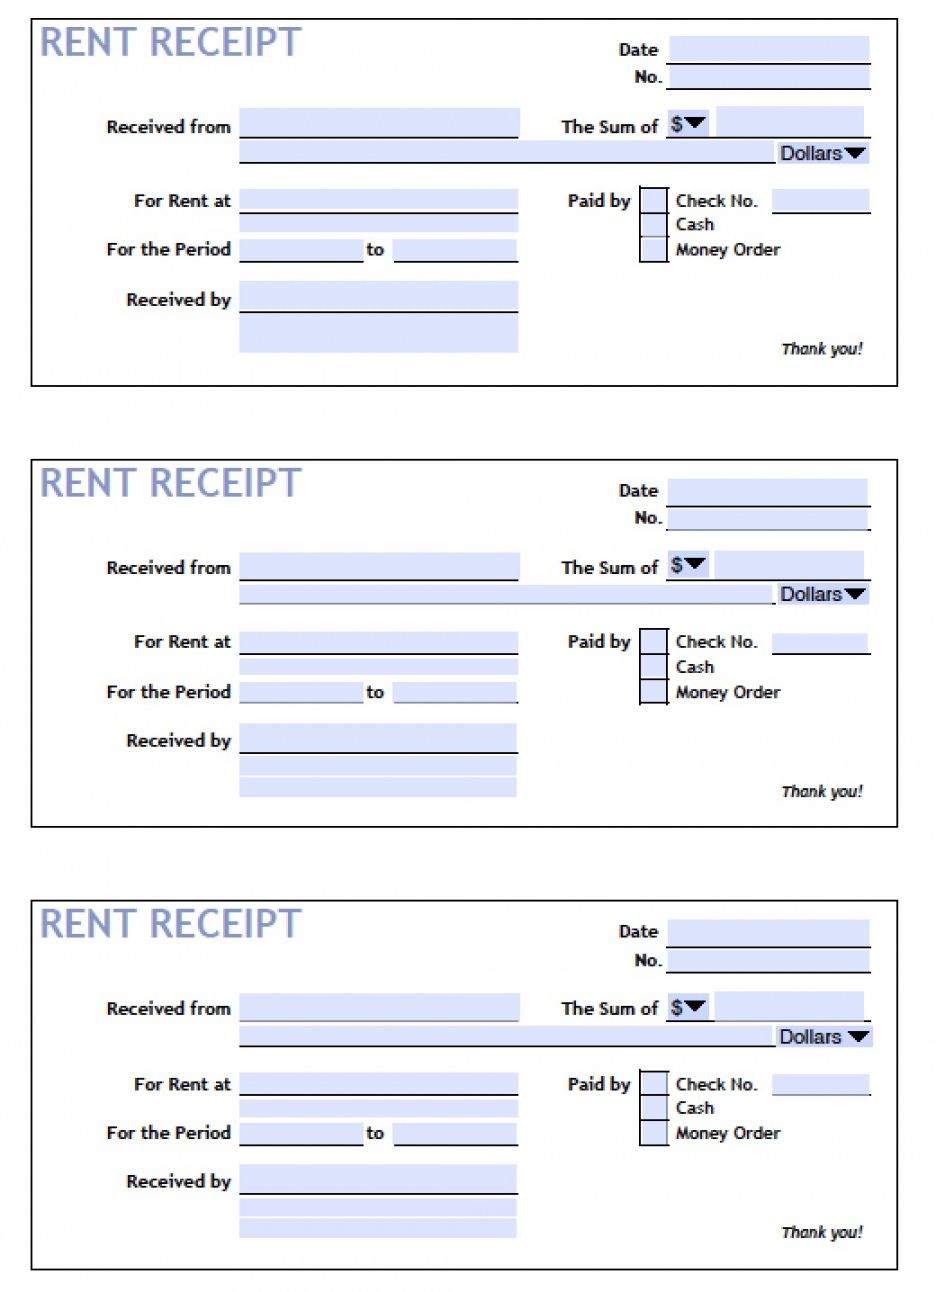 rent-receipt-templates-emetonlineblog